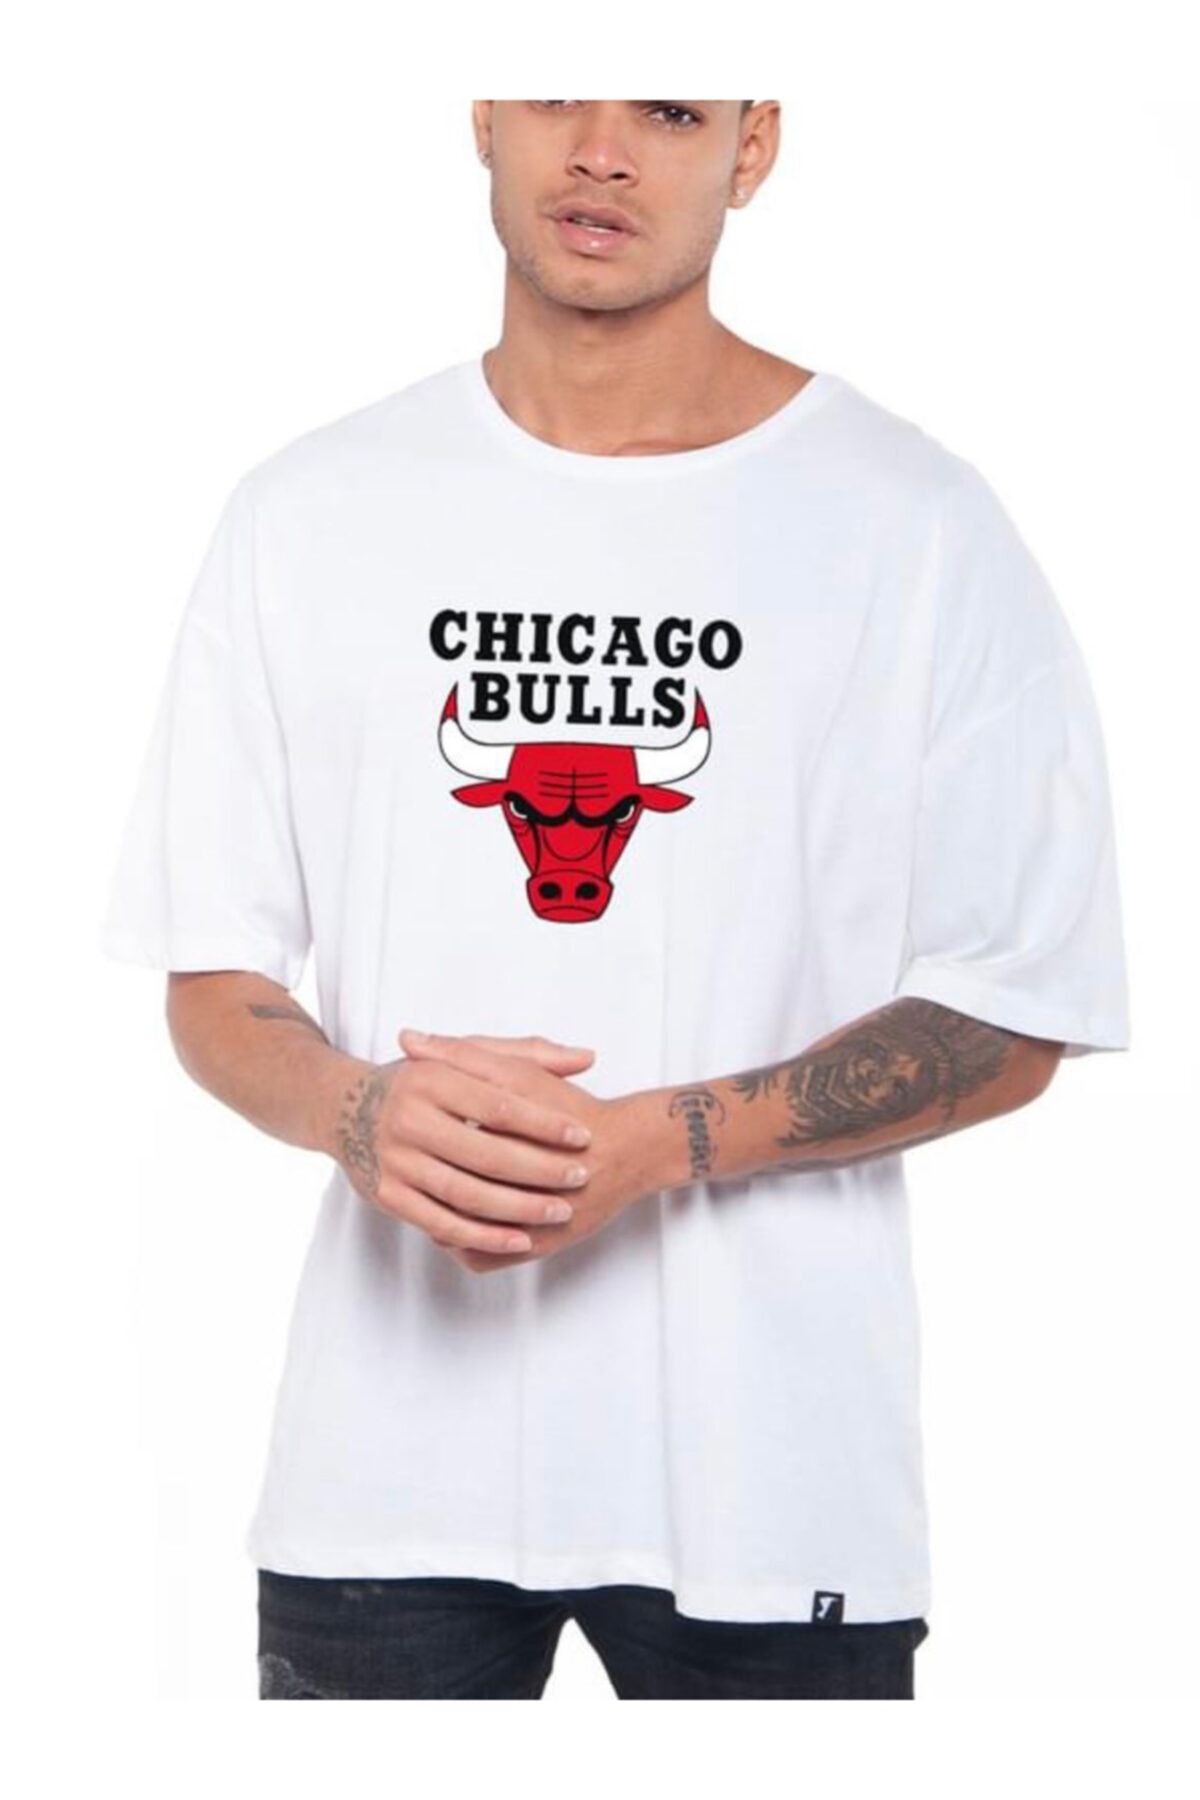 İnsane Minds Chigago Bulls Beyaz Renk Oversize Tshirt